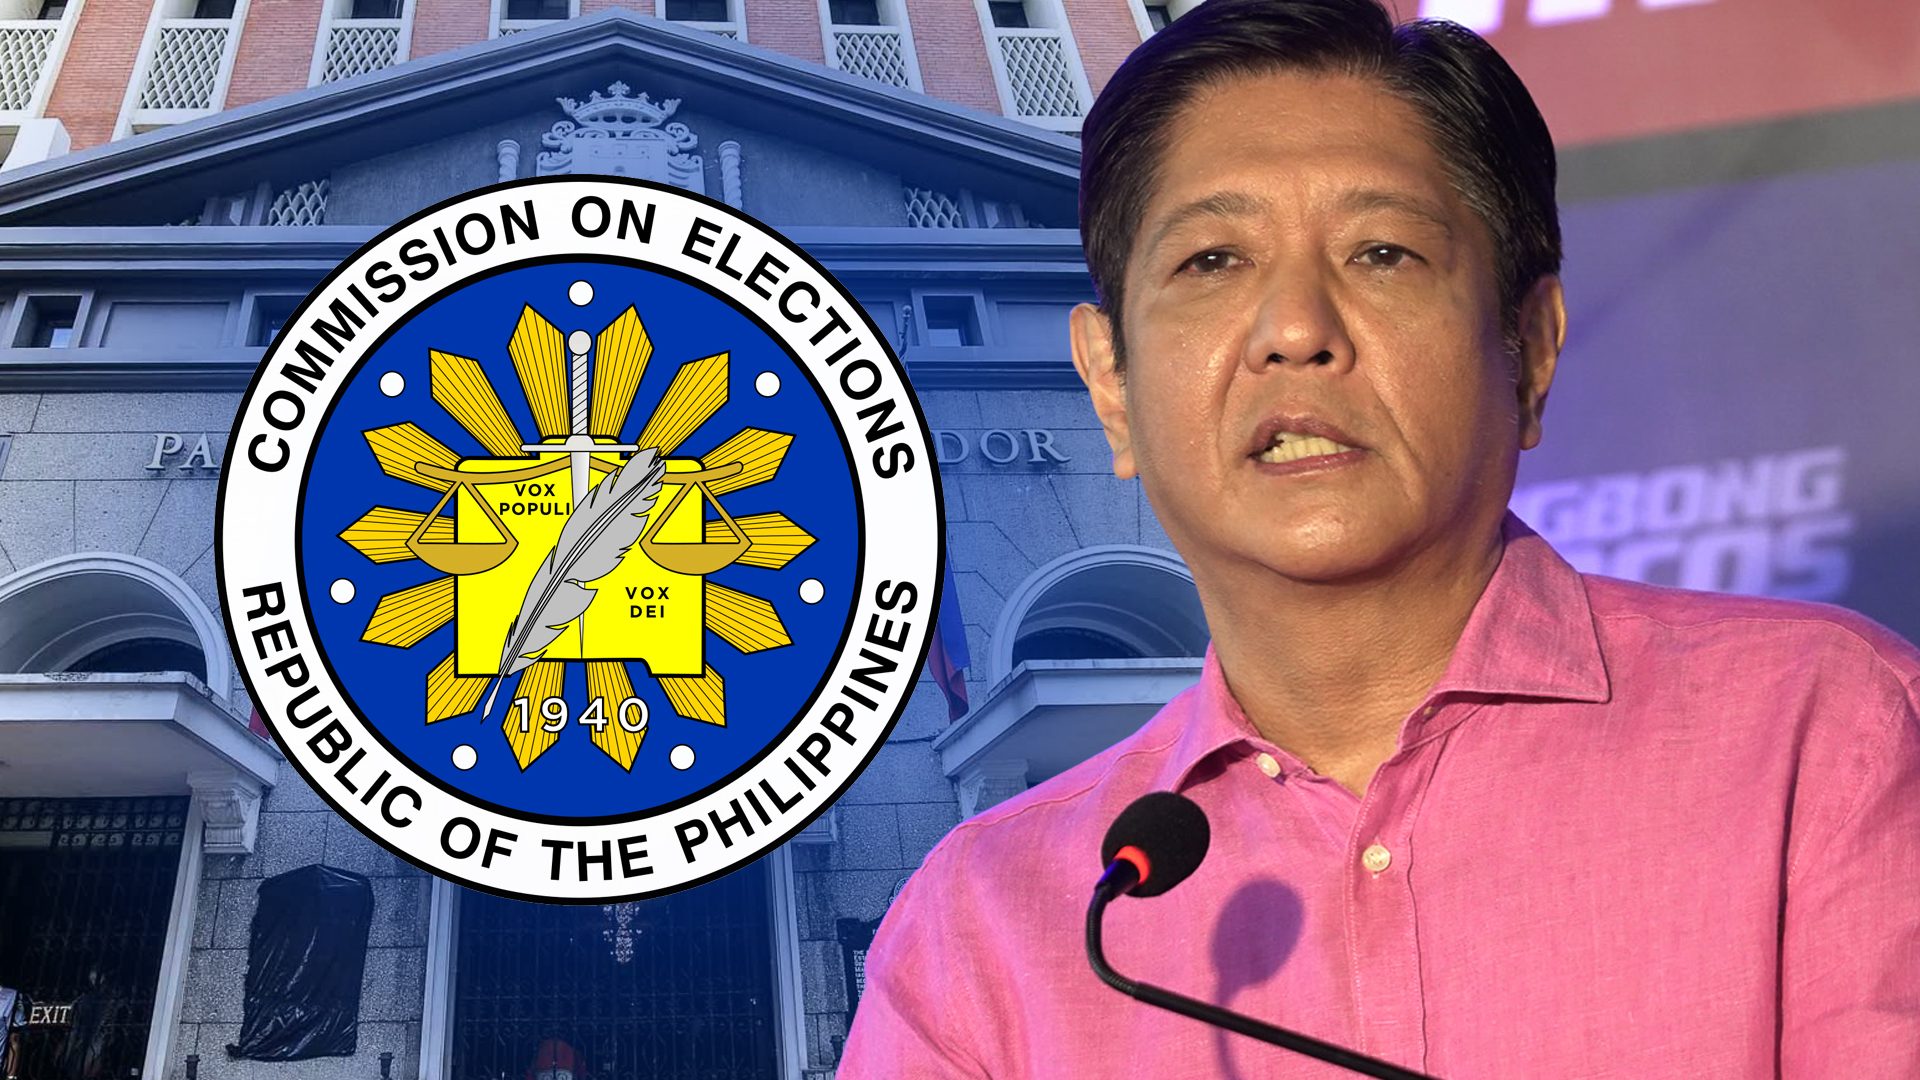 LIST: Petitions seeking to block Bongbong Marcos’ 2022 presidential bid